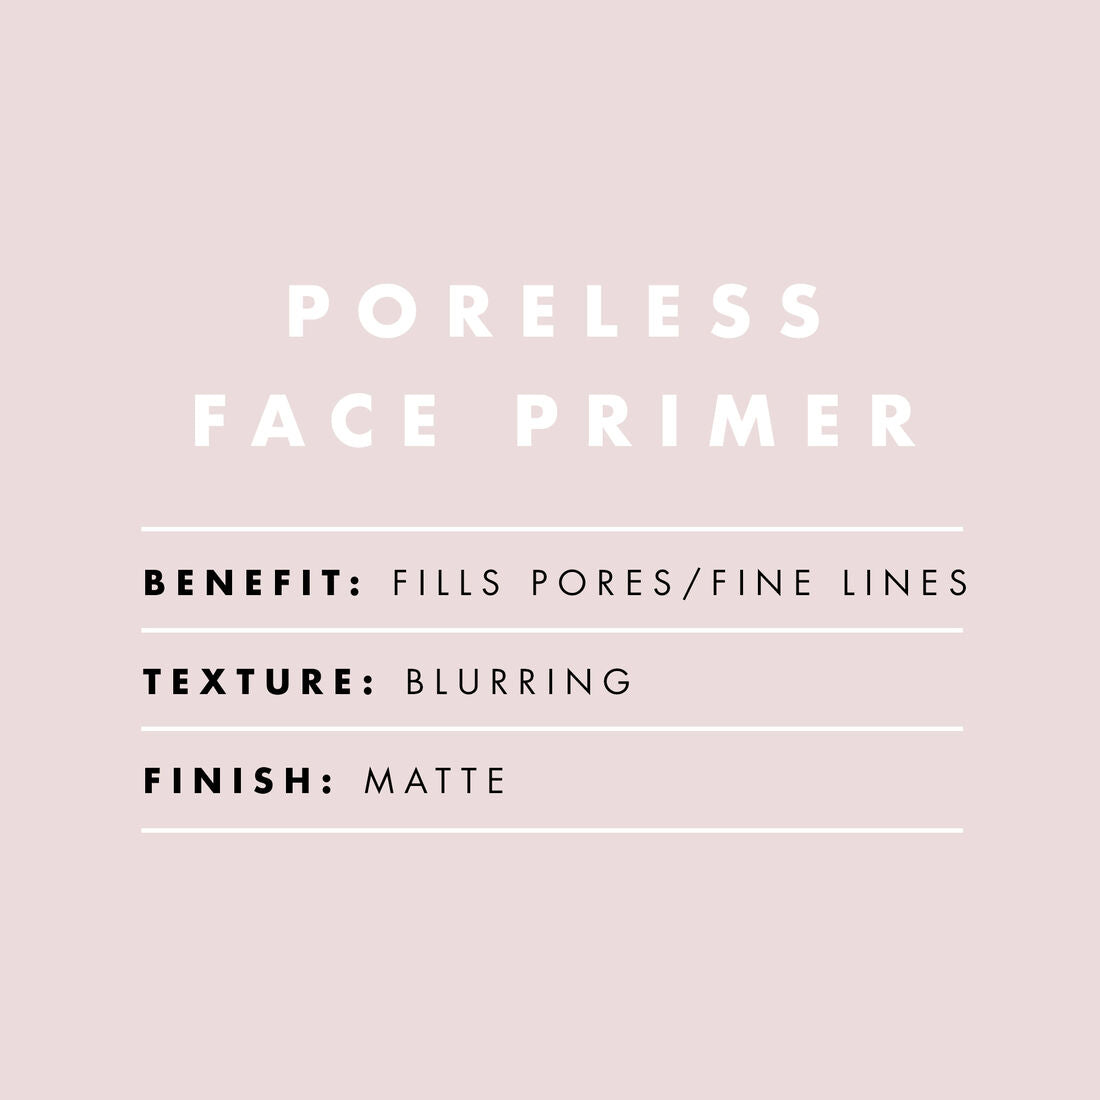 Benefits of elf Powerless Face Primer